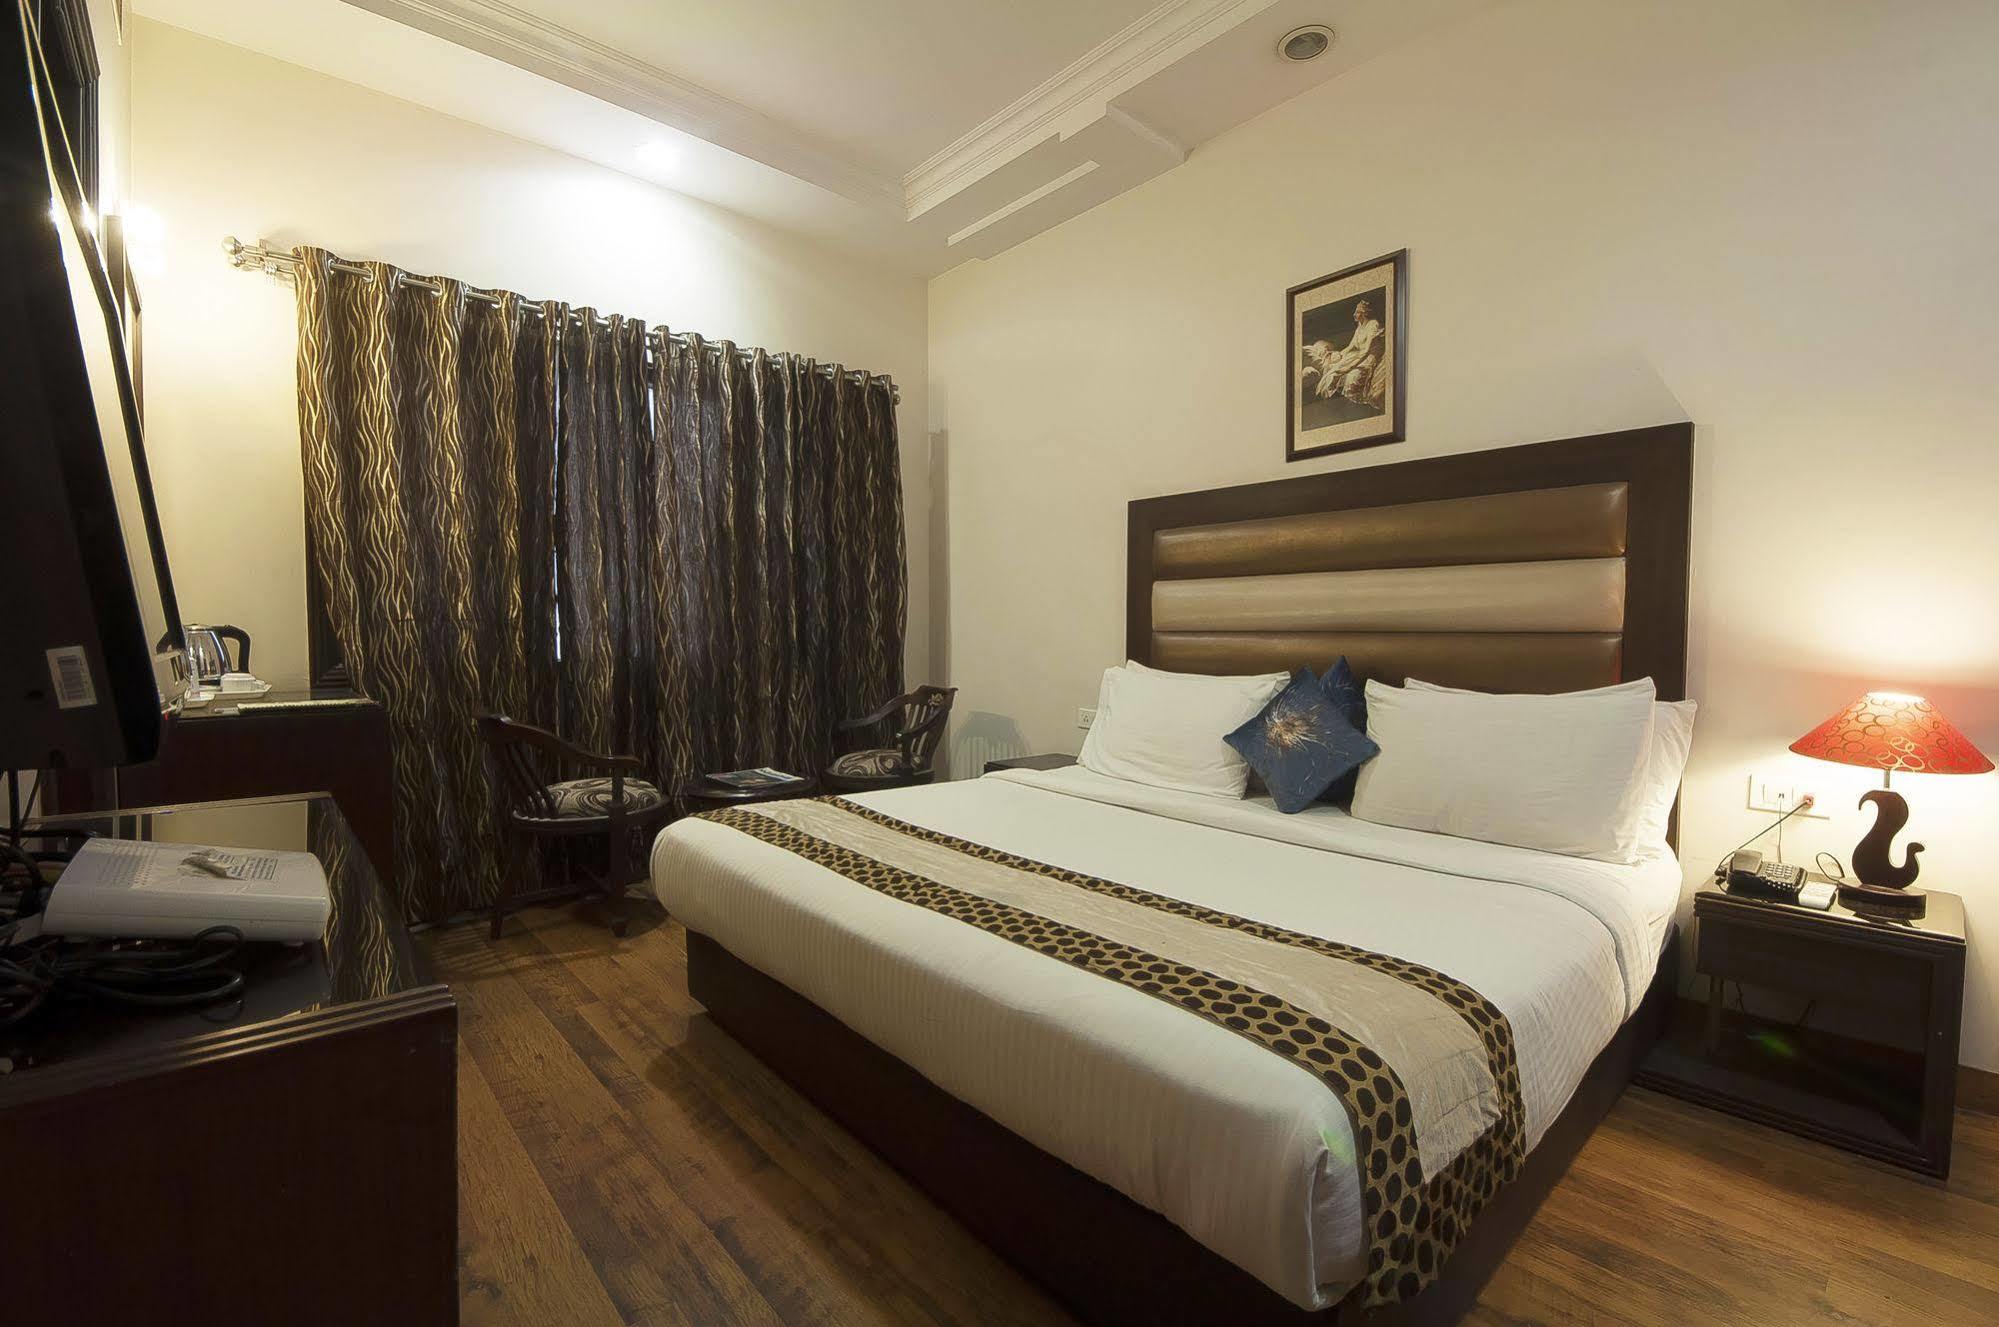 Hotel Prems Paradise Amritsar Exterior photo